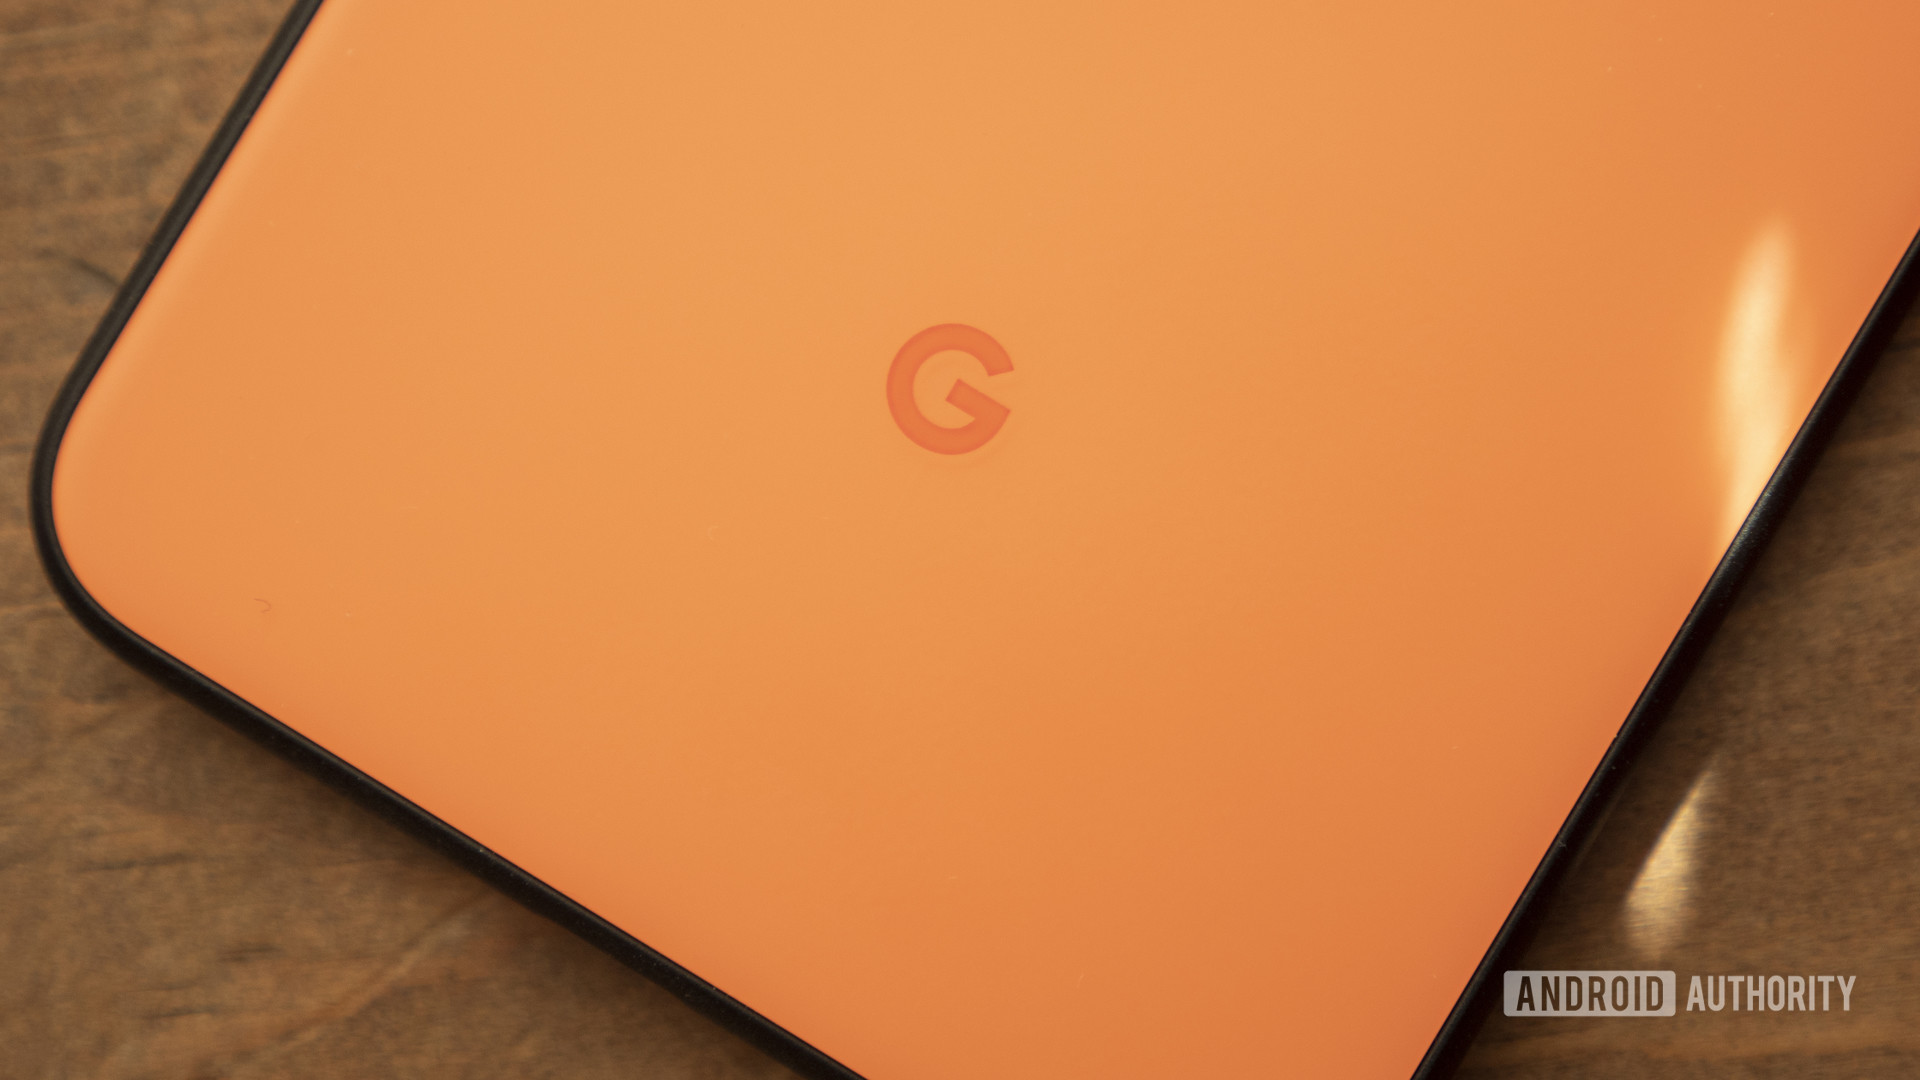 Google Pixel 4a Retail Packaging Surfaces Online, Reveals Design